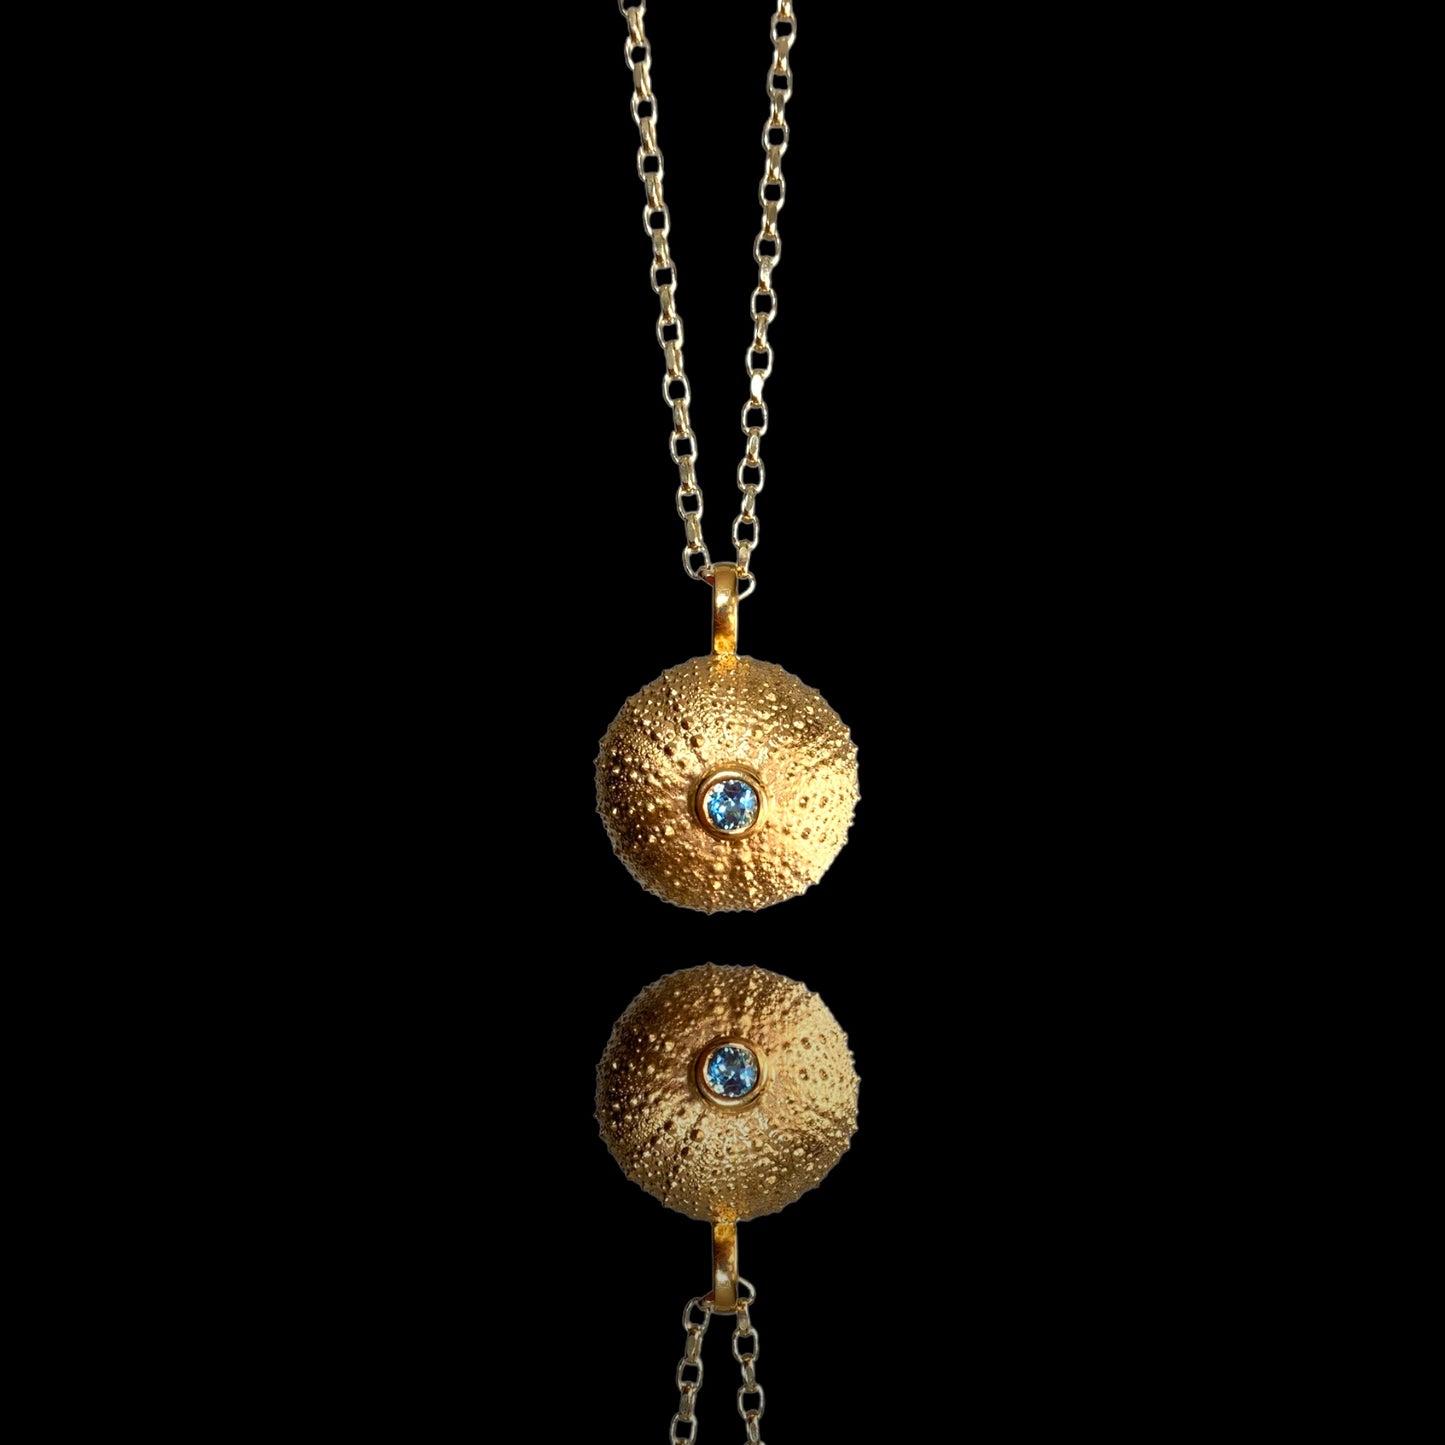 Sea Urchin Necklace in Gold vermeil